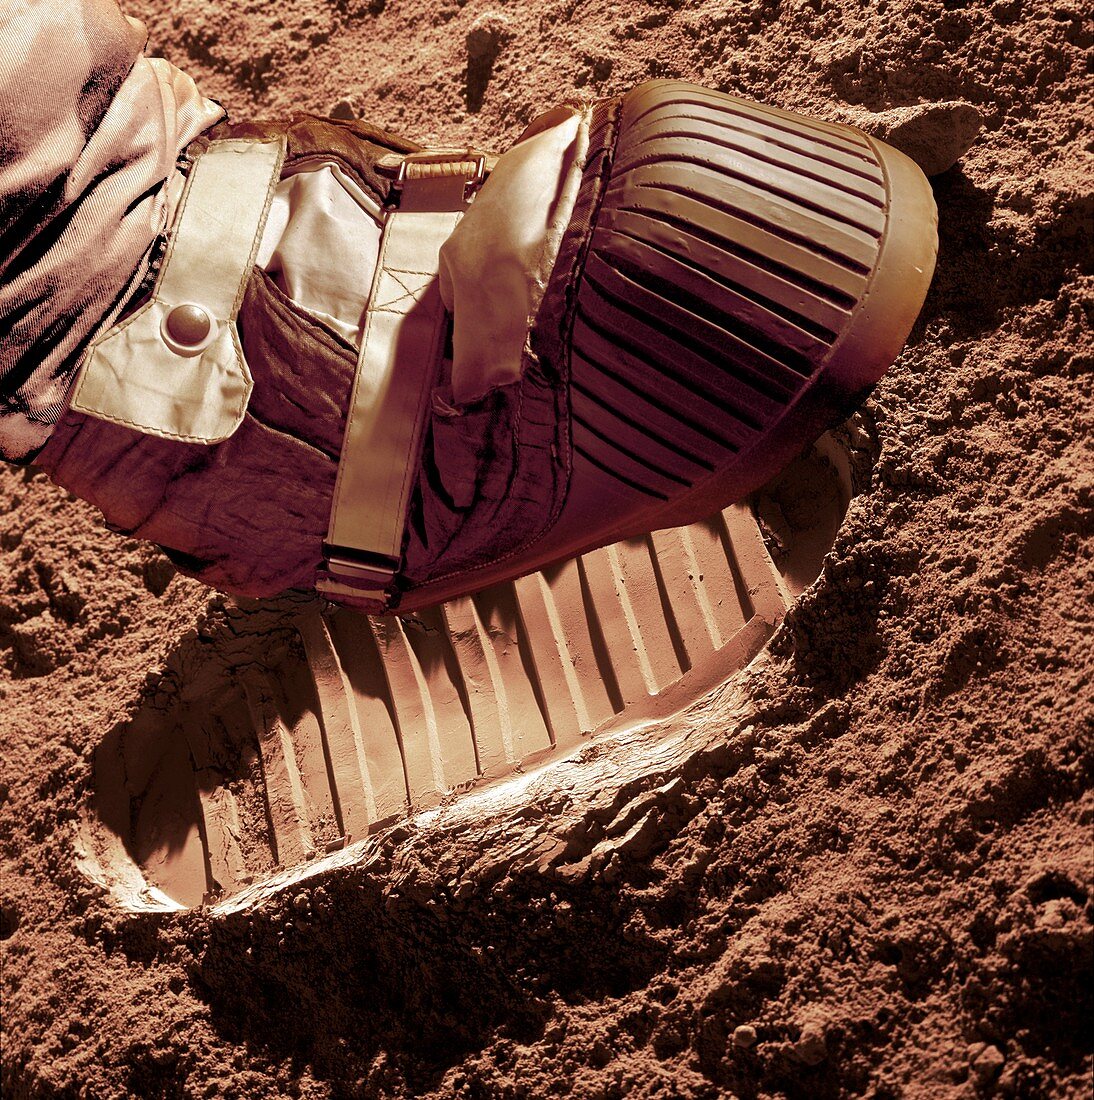 First step on Mars, illustration